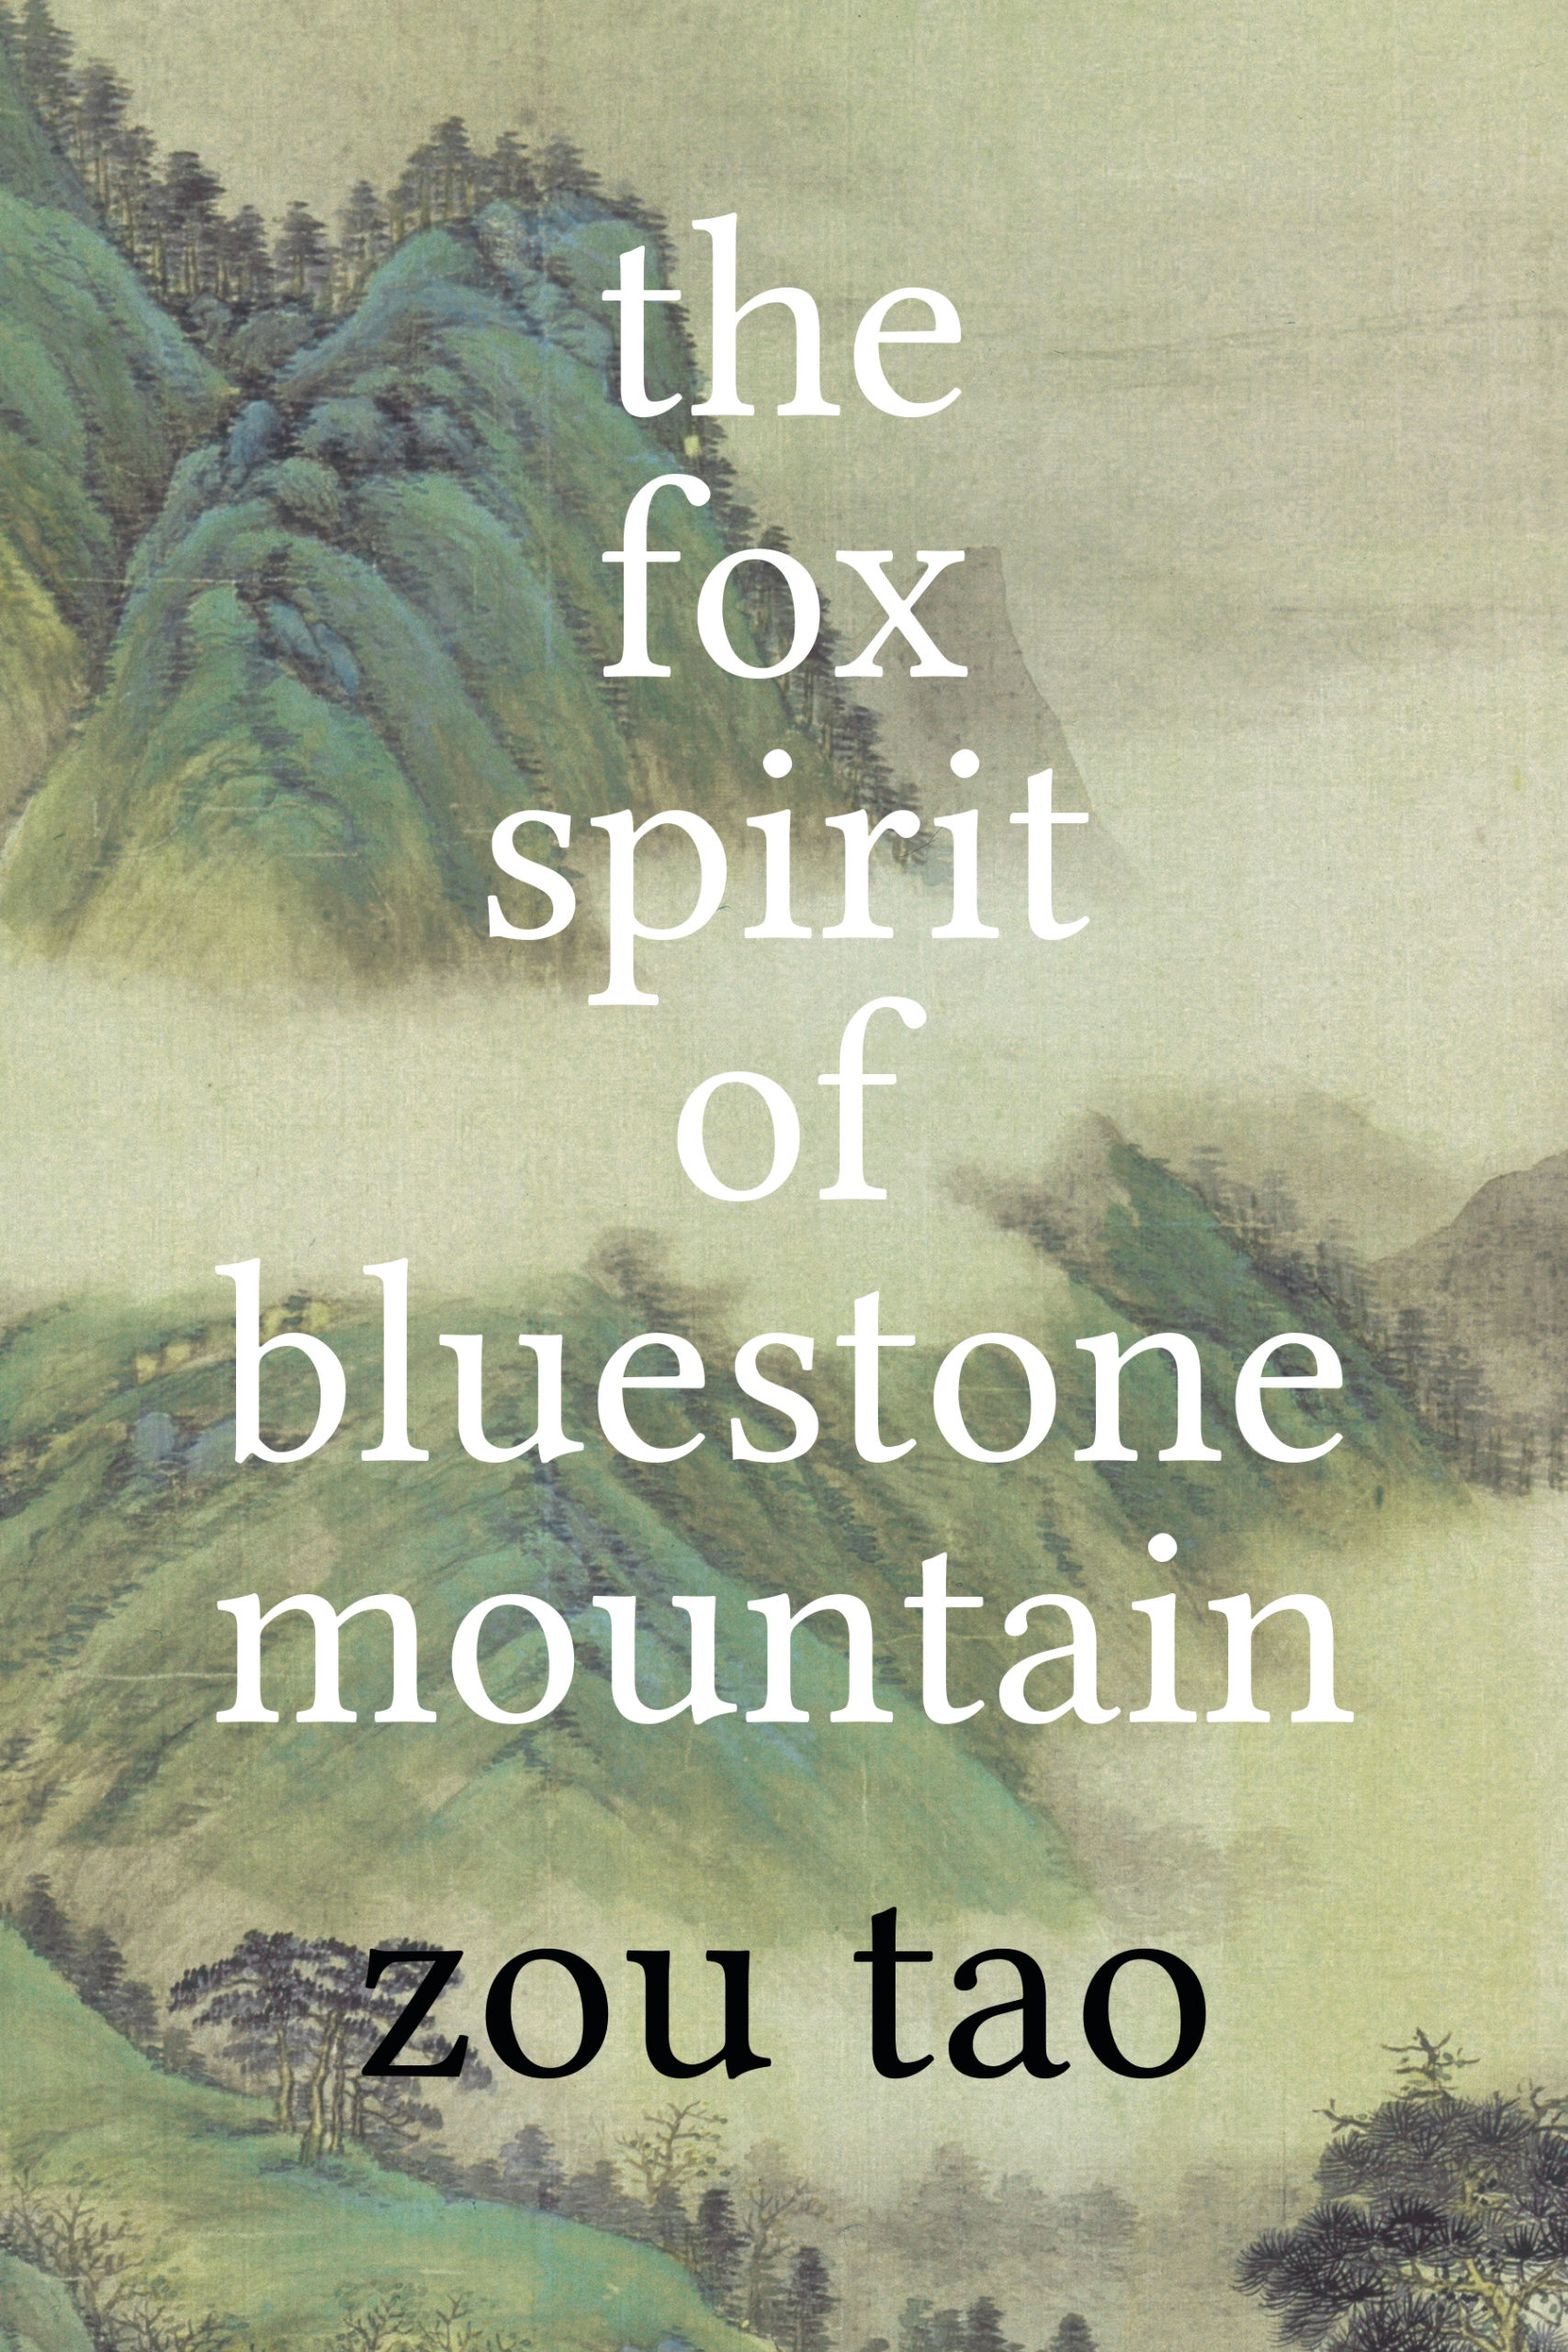 The cover of The Fox Spirit of Bluestone Mountain